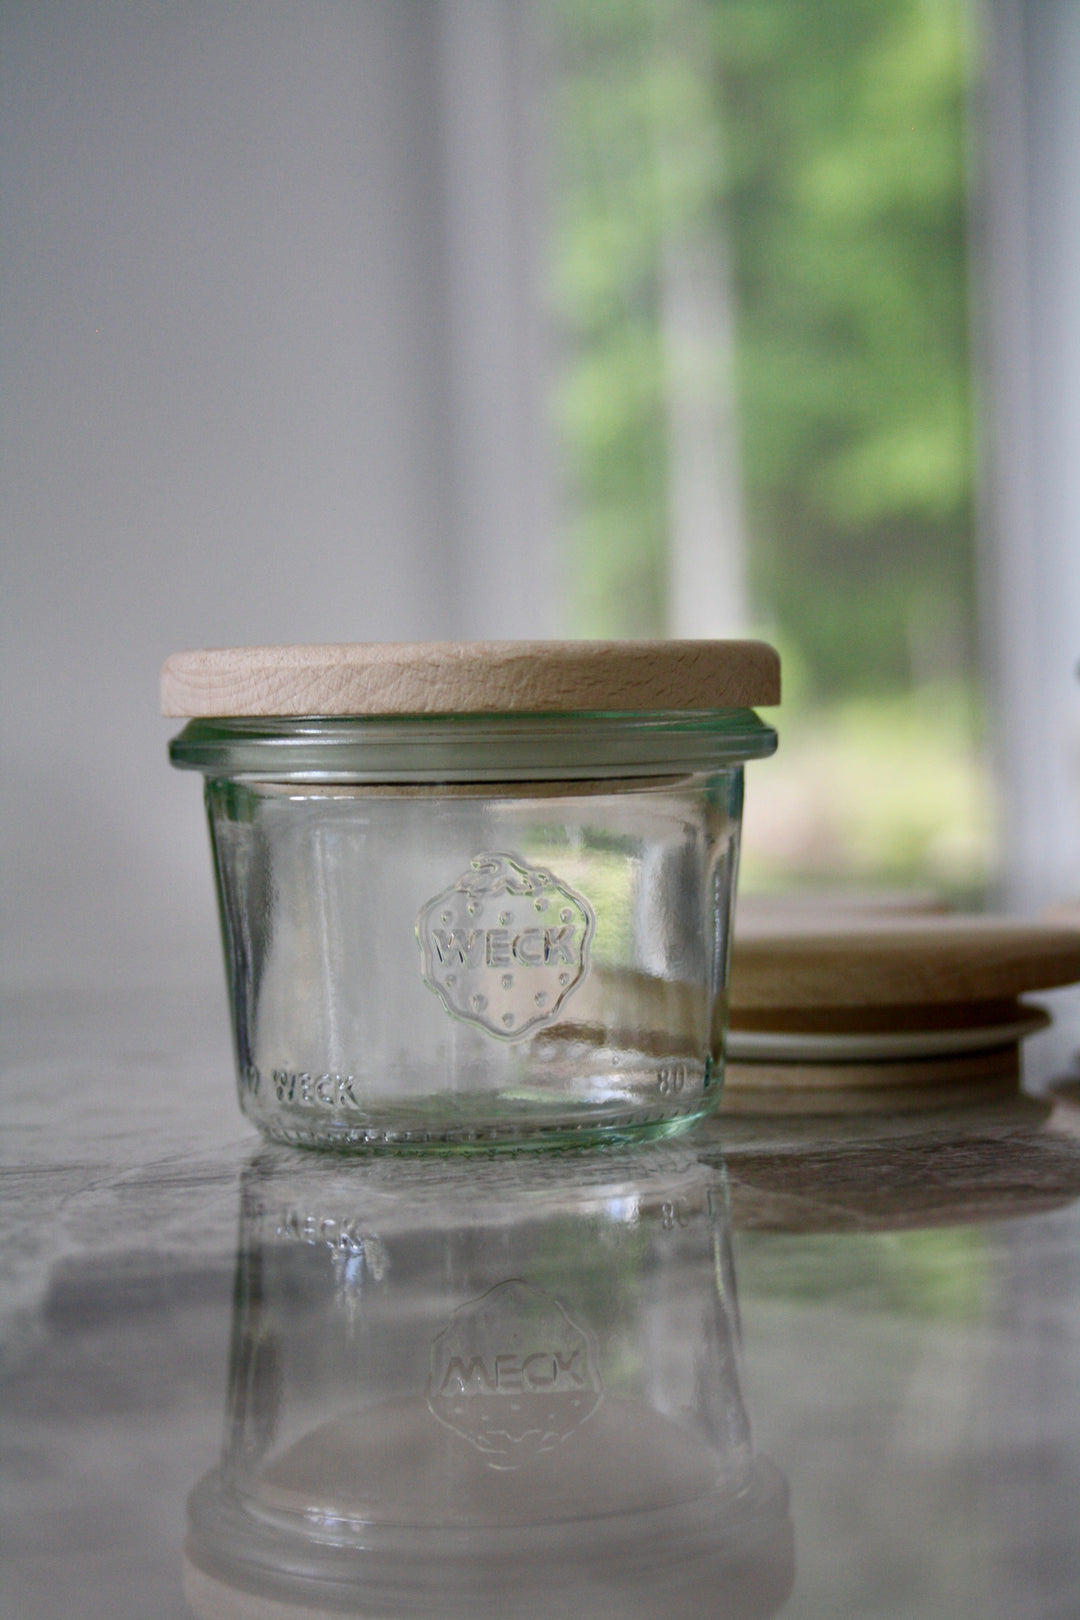 Tulip Shaped Glass Jar by Weck Jars